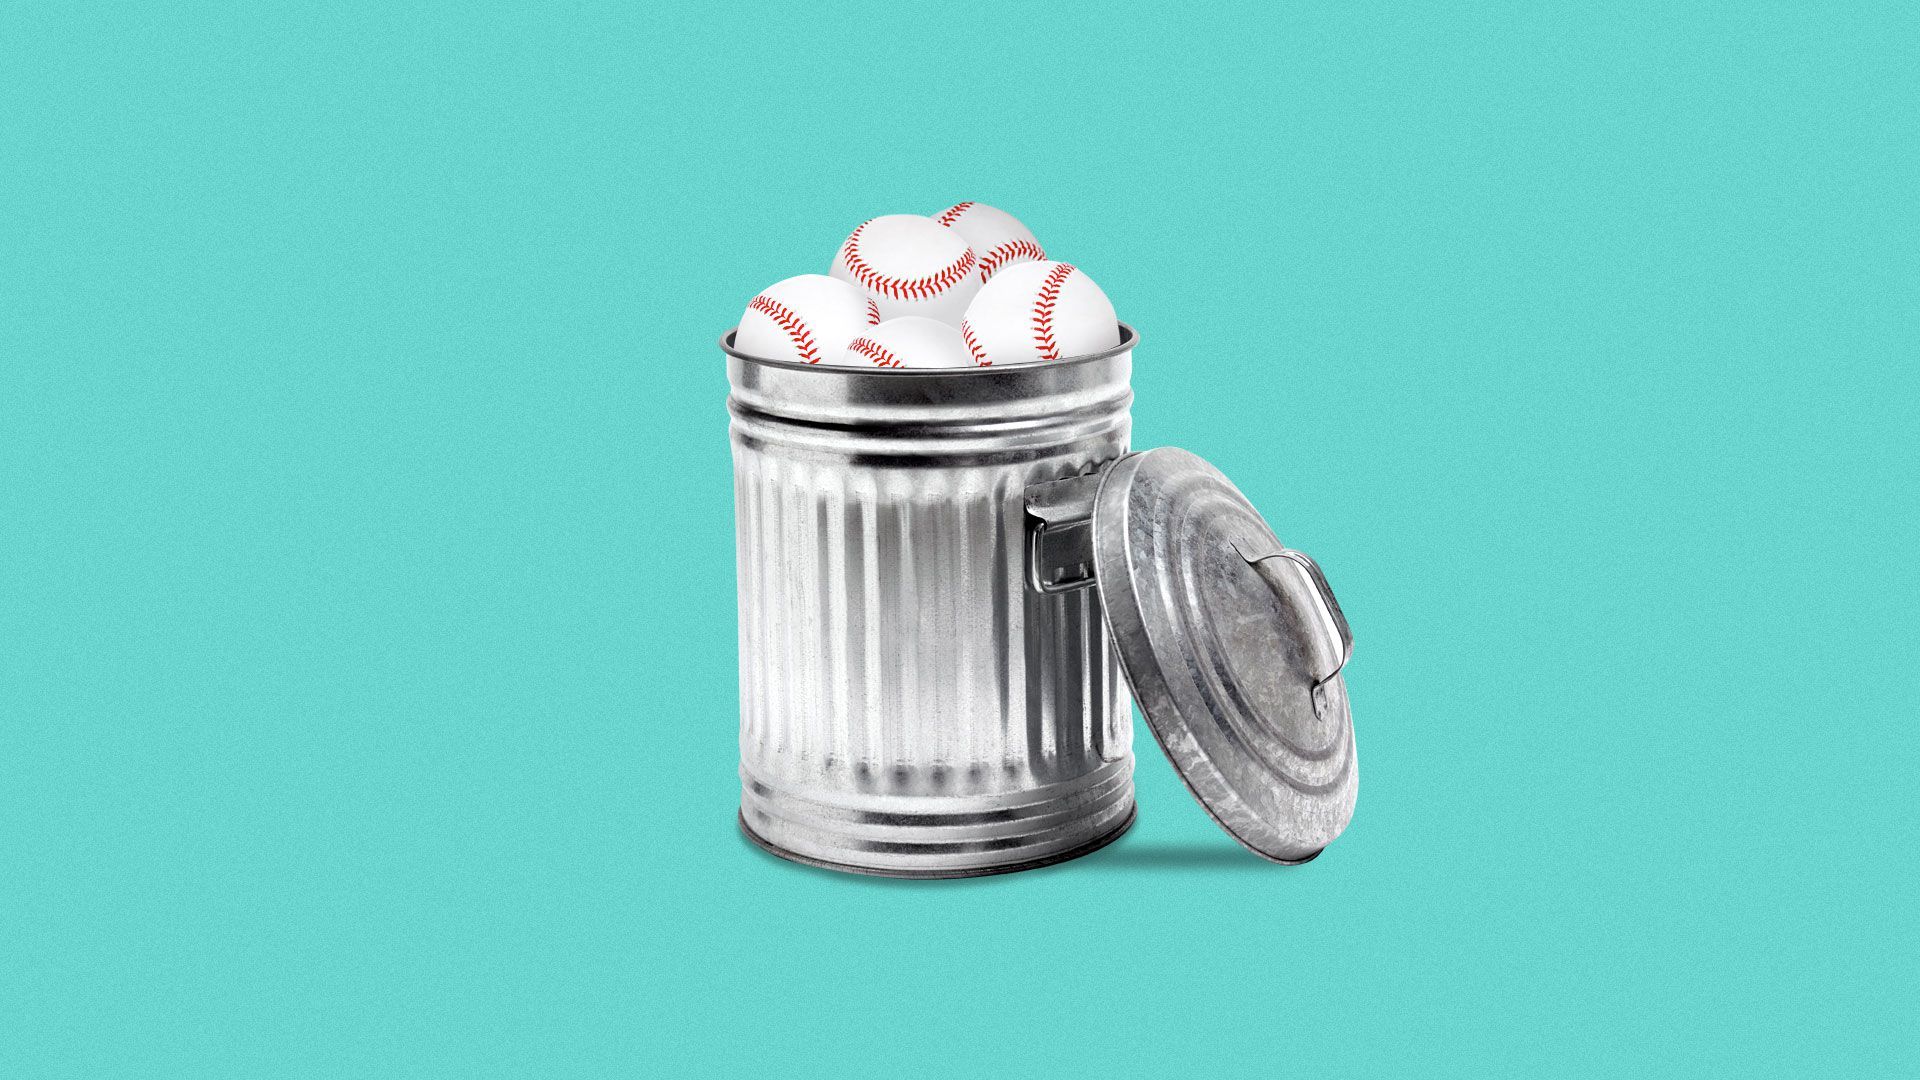 Illustration of metal garbage can filled with baseballs